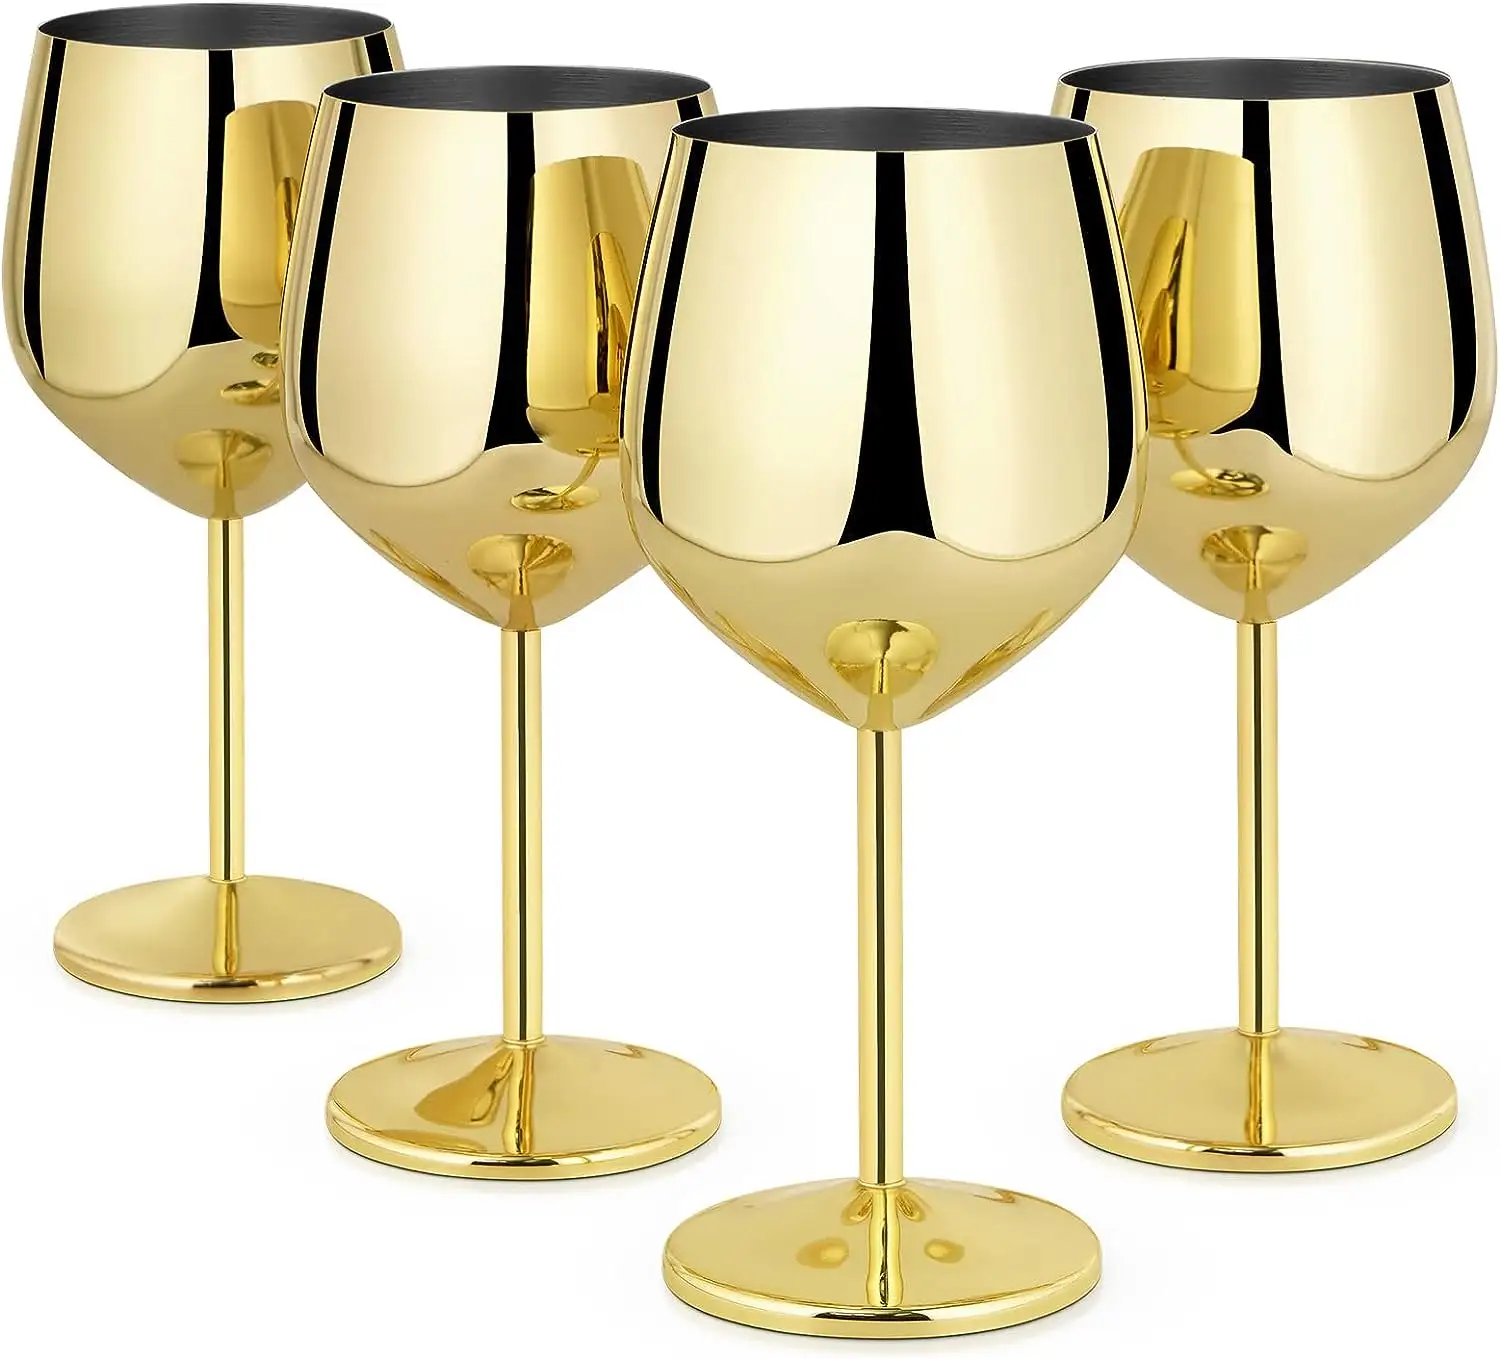 Copa de vino tinto aislada de acero inoxidable de venta Premium, copa de champán de Metal irrompible, accesorios para vino